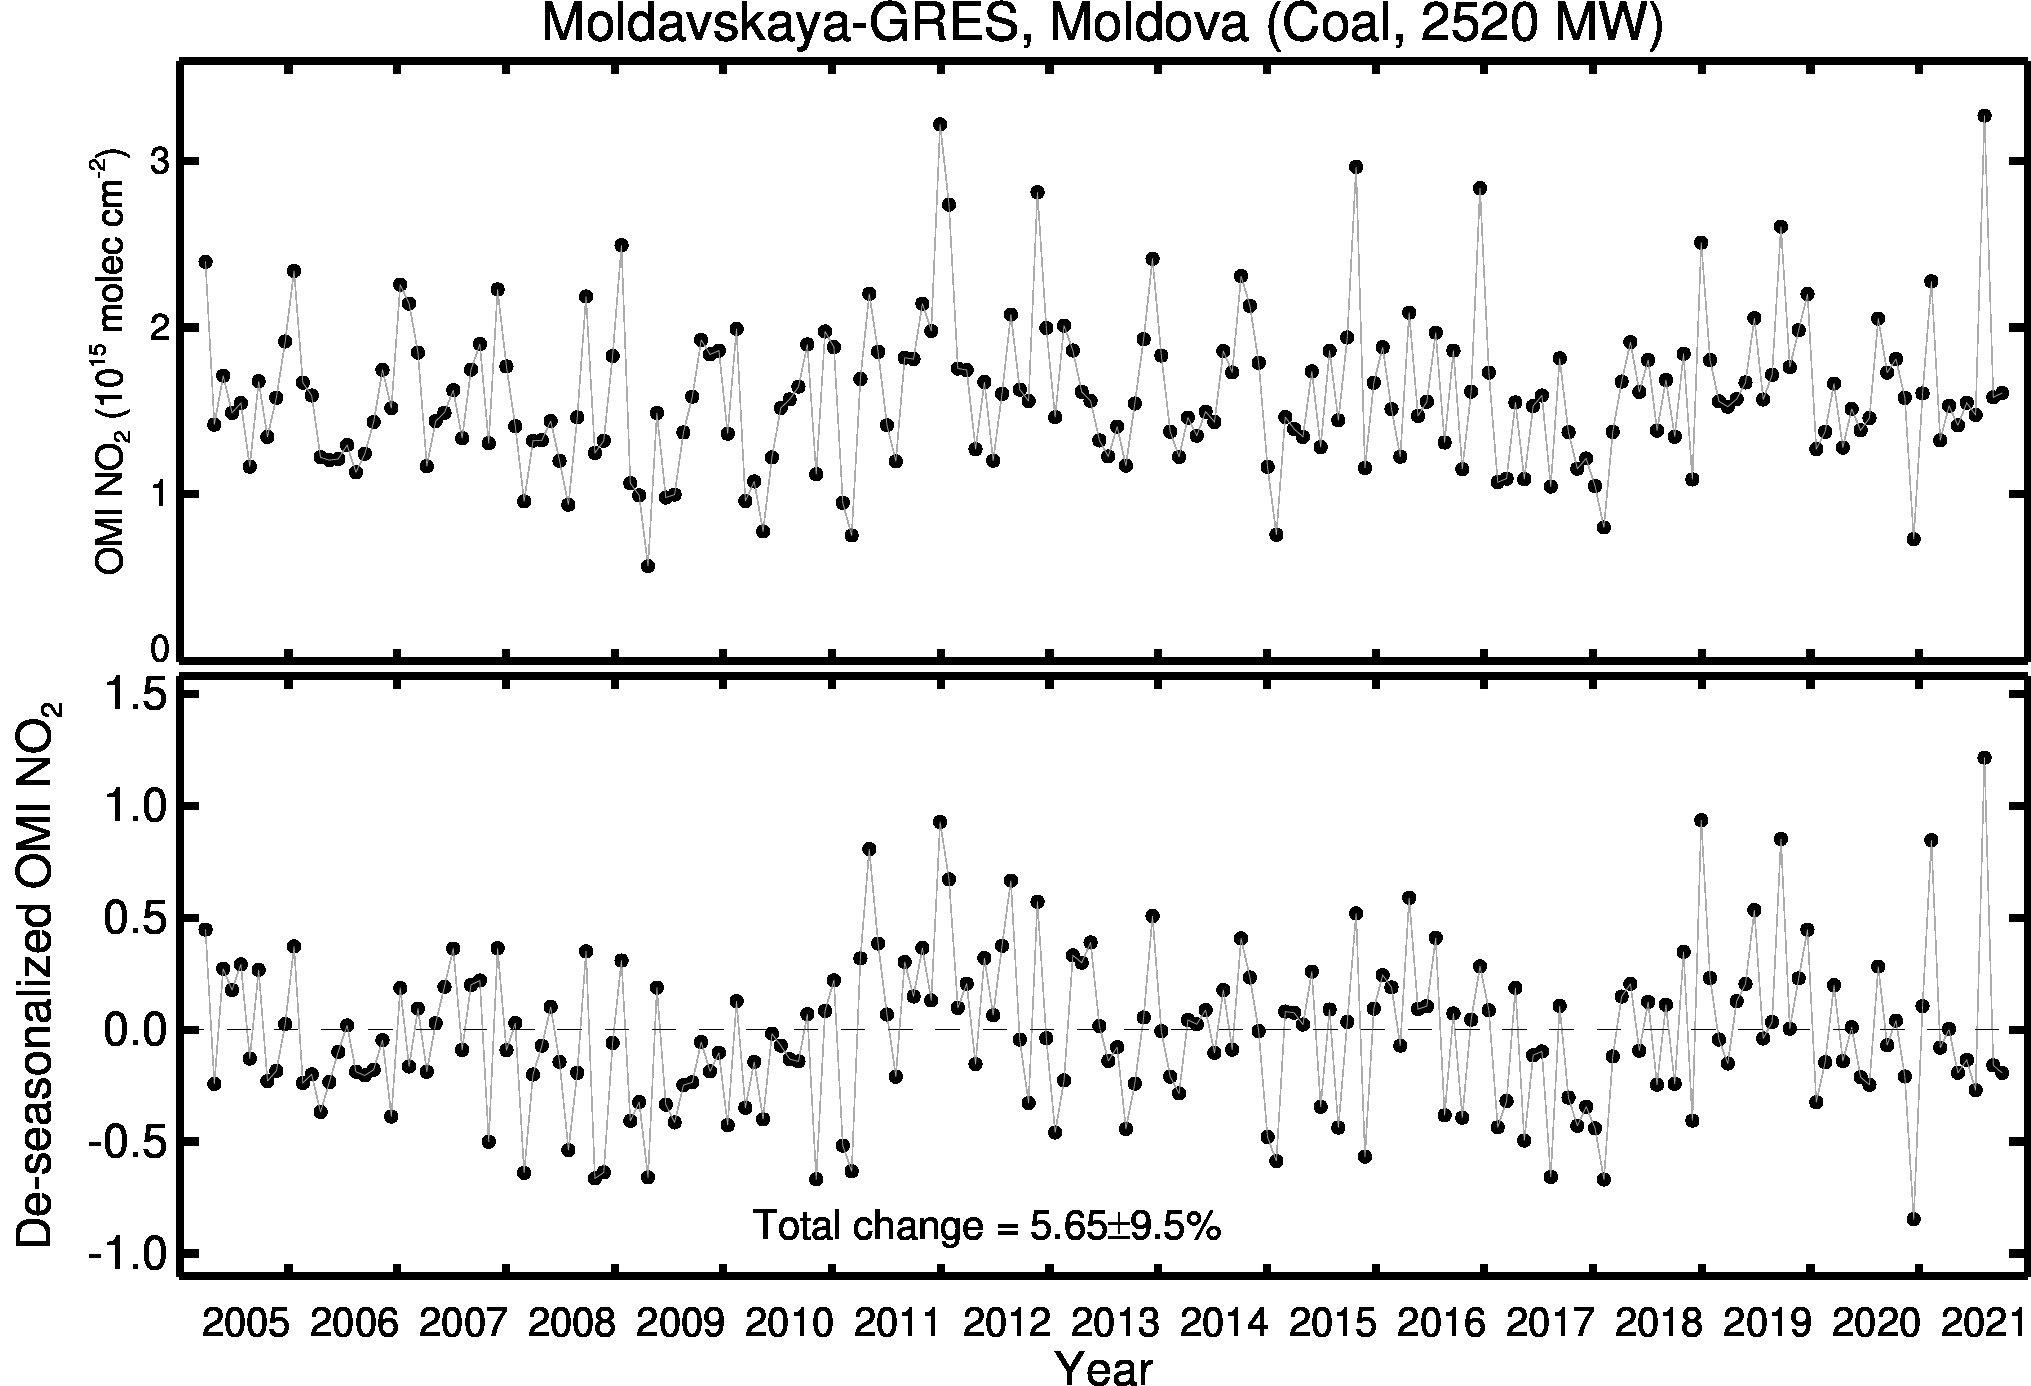 Moldavskaya GRES Line Plot 2005-2021